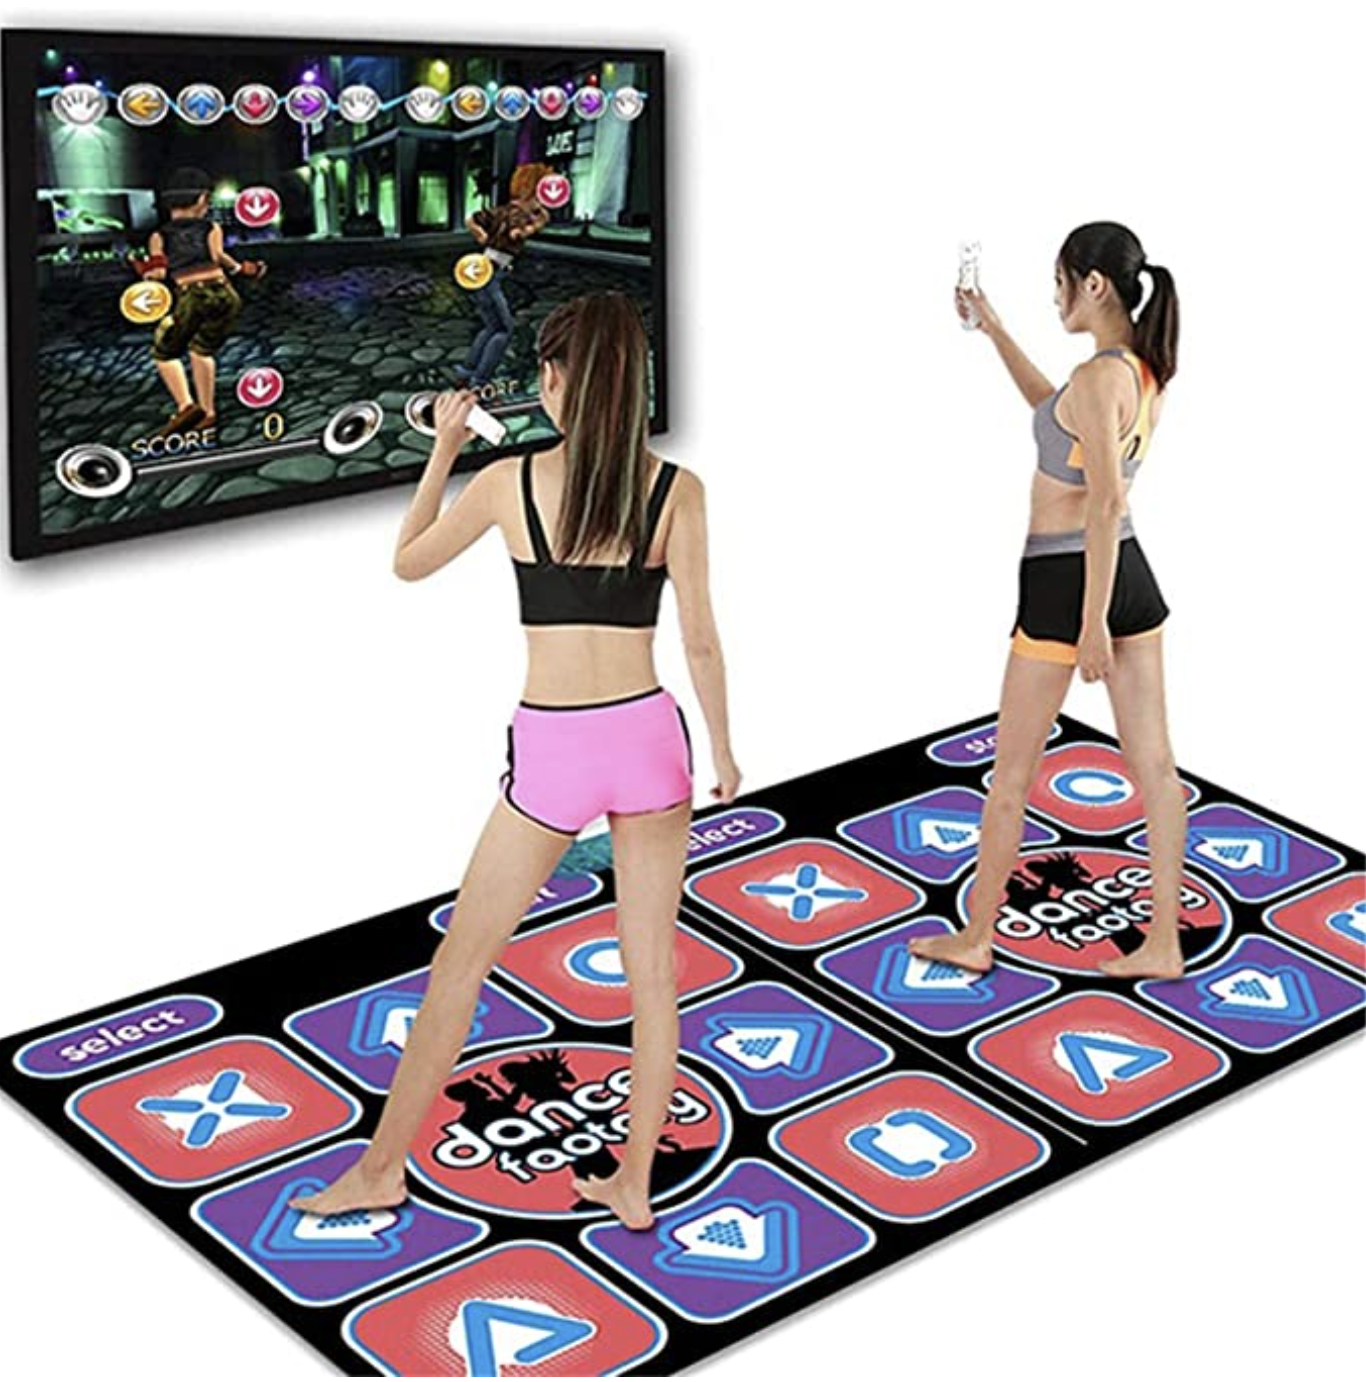 Image of dance mat and 2 girls dancing